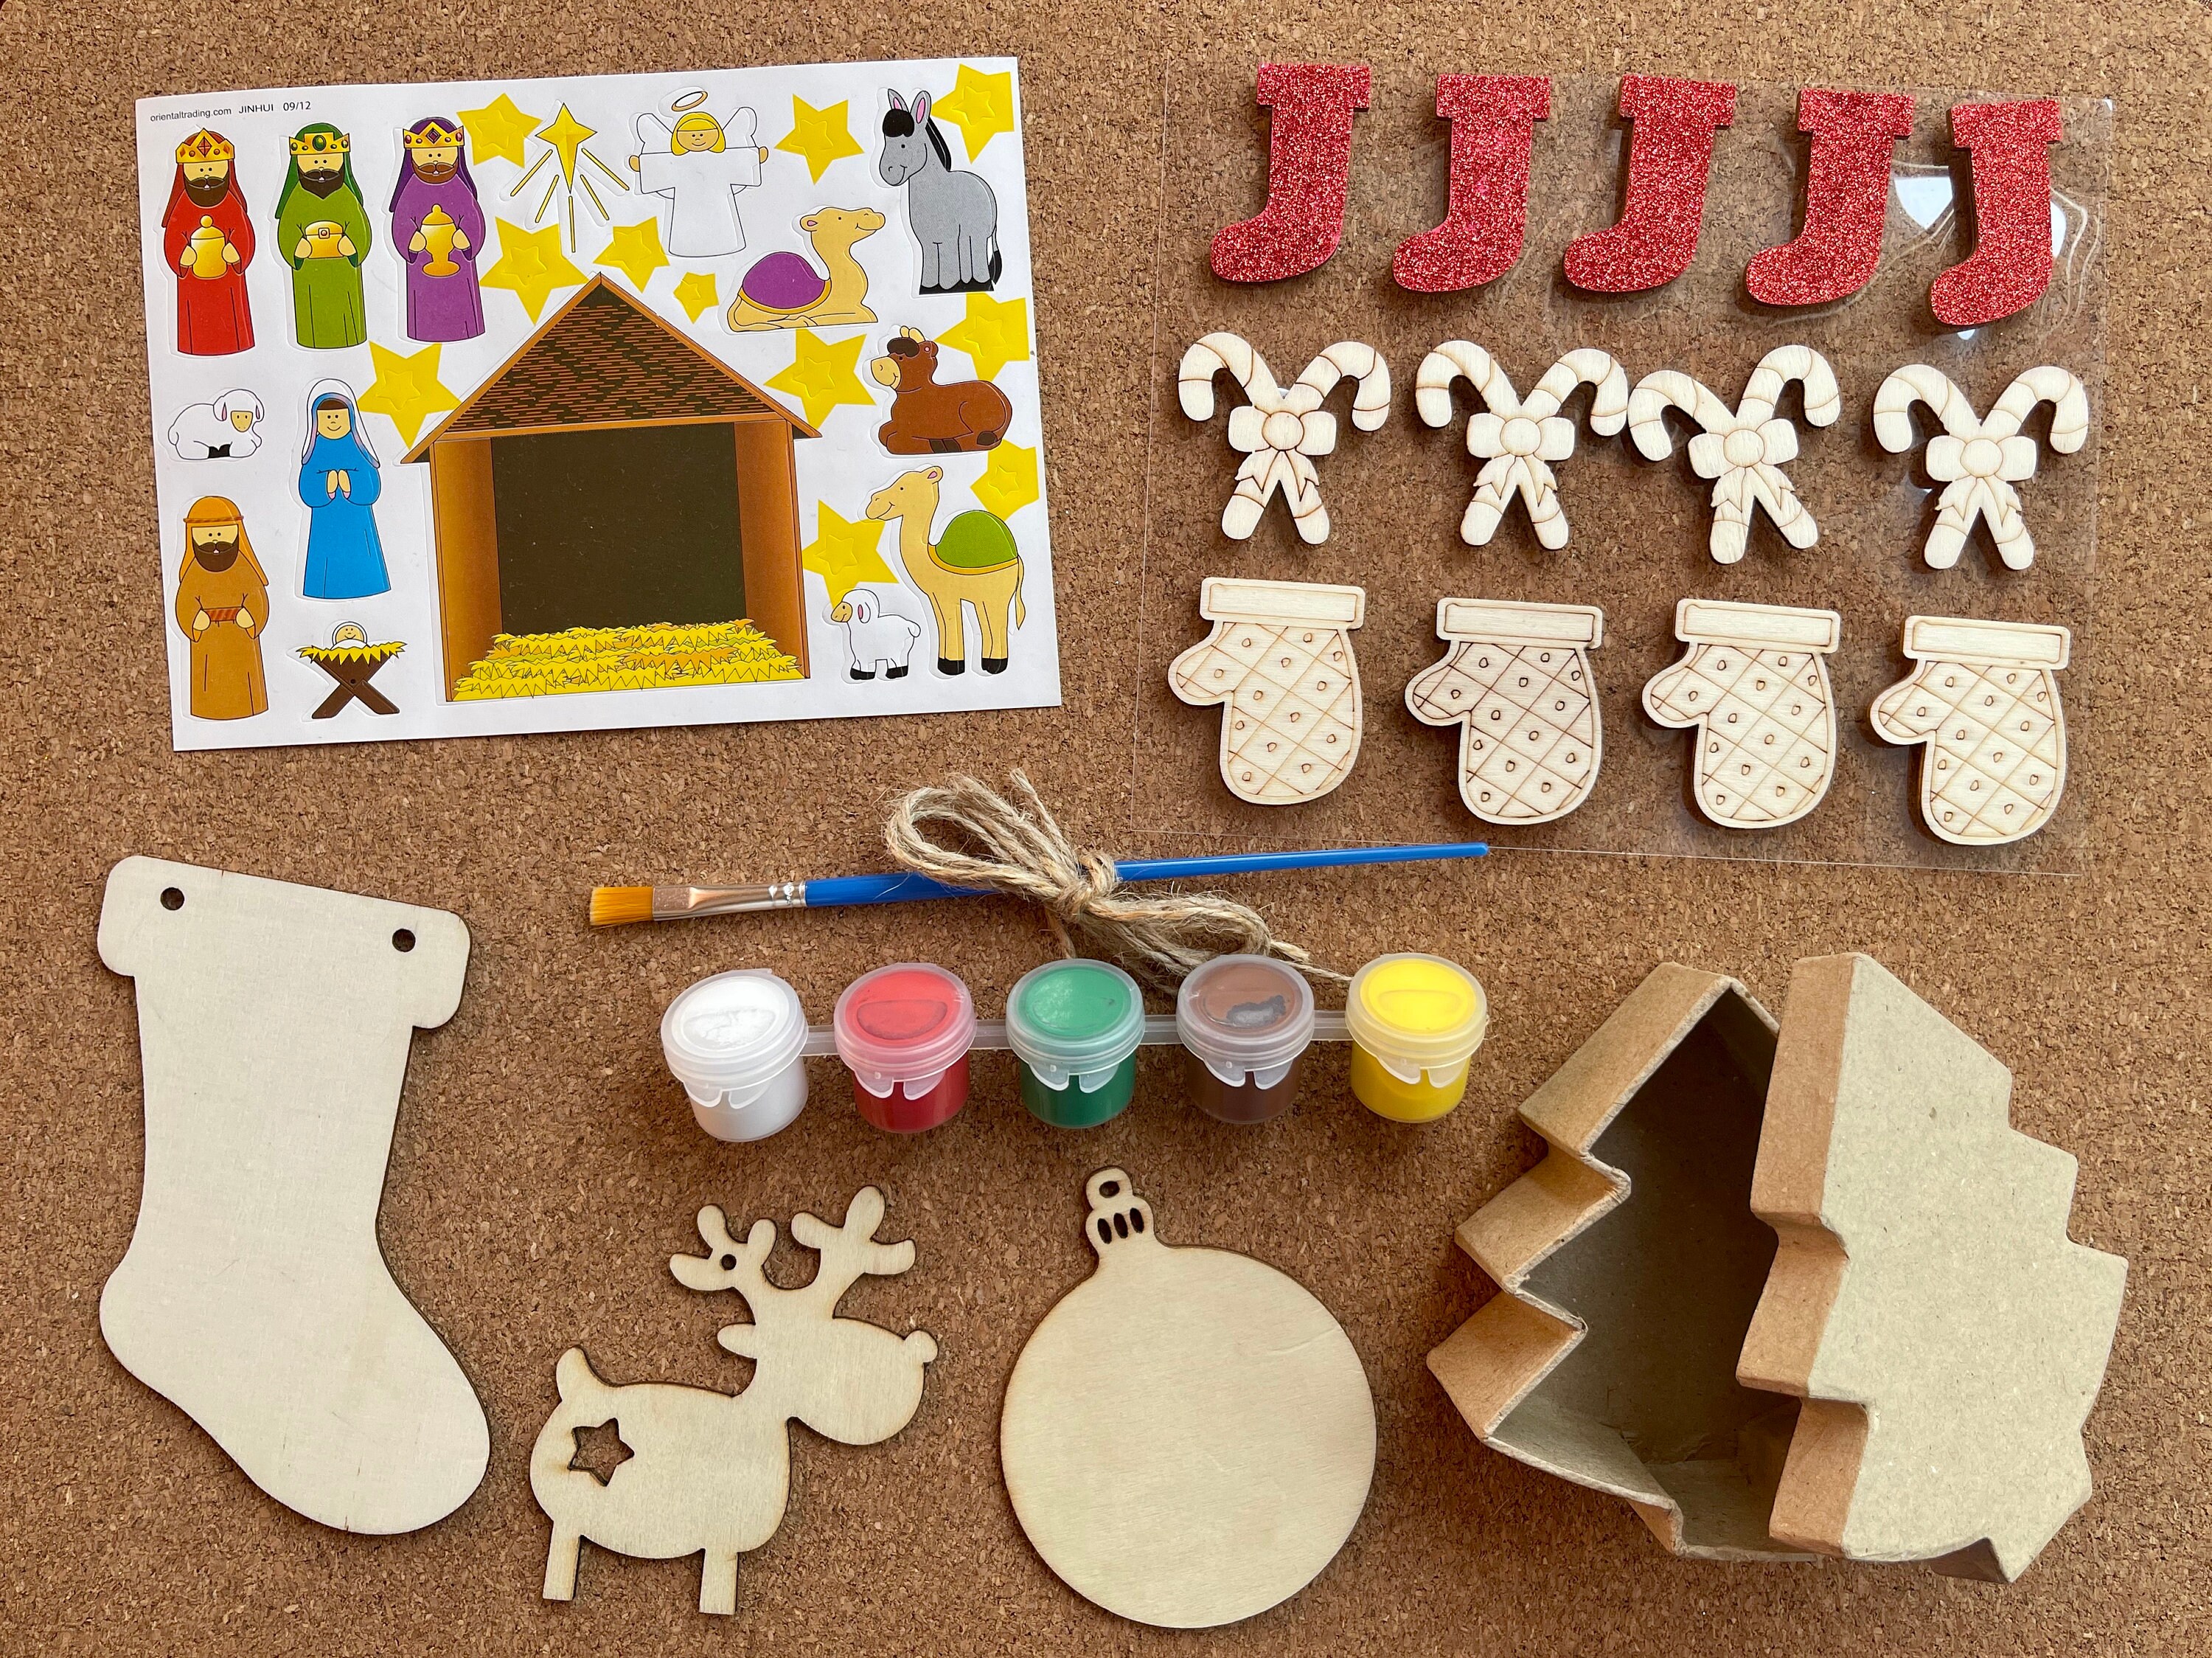 Christmas Ornaments Wood Shapes Painting Kit. 